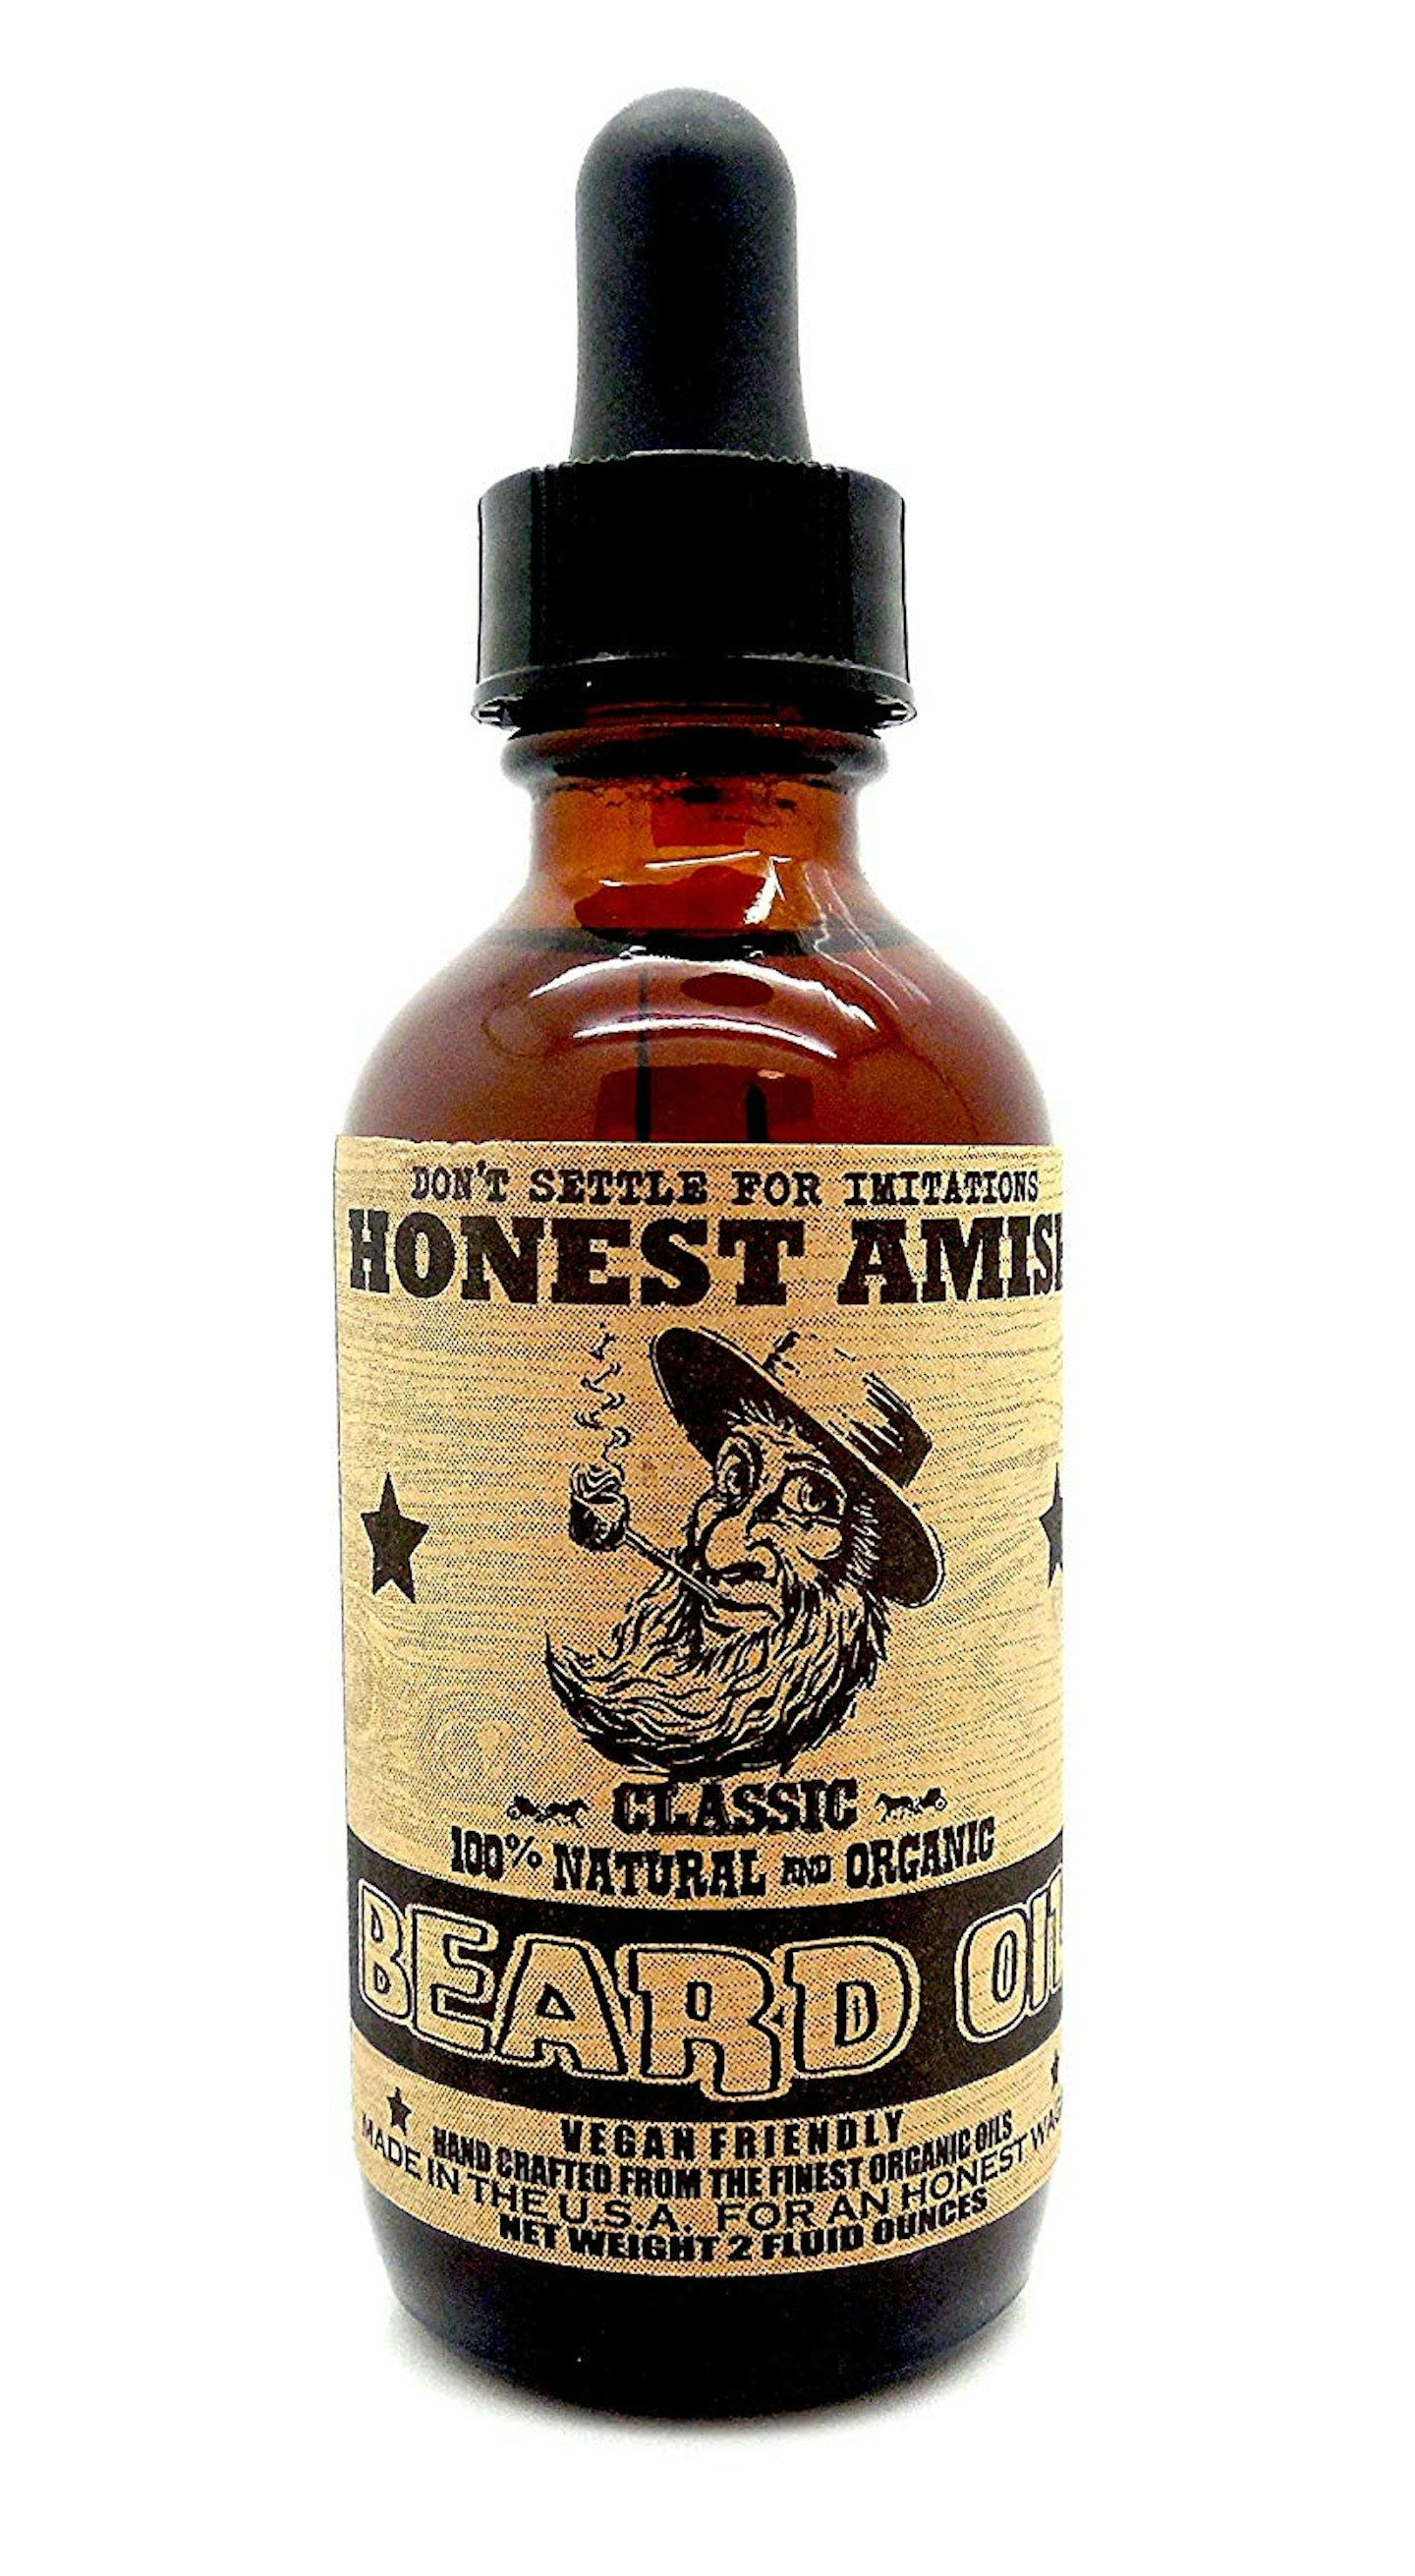 Honest Amish - Classic Beard Oil - 2oz by Honest Amish